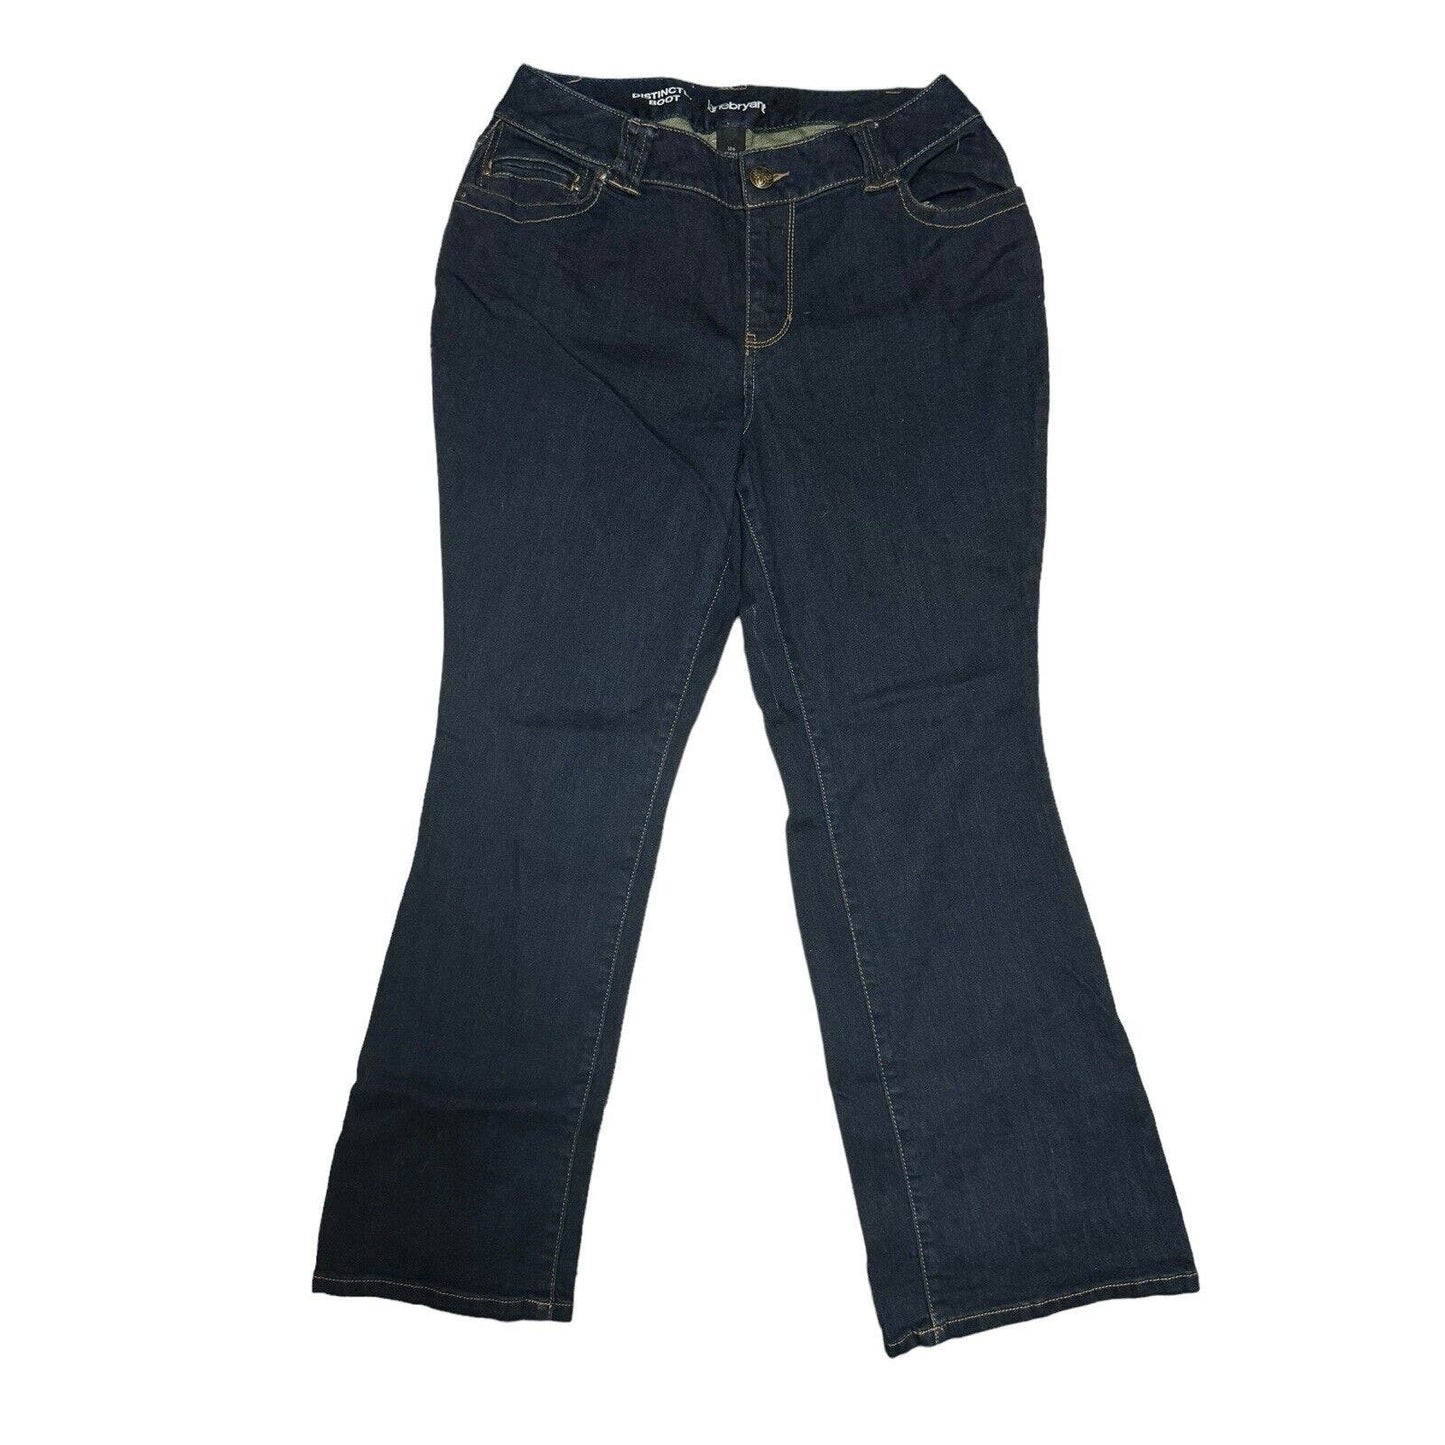 Lane Bryant Distinctly Boot Dark Wash Denim Jeans 14 Petite